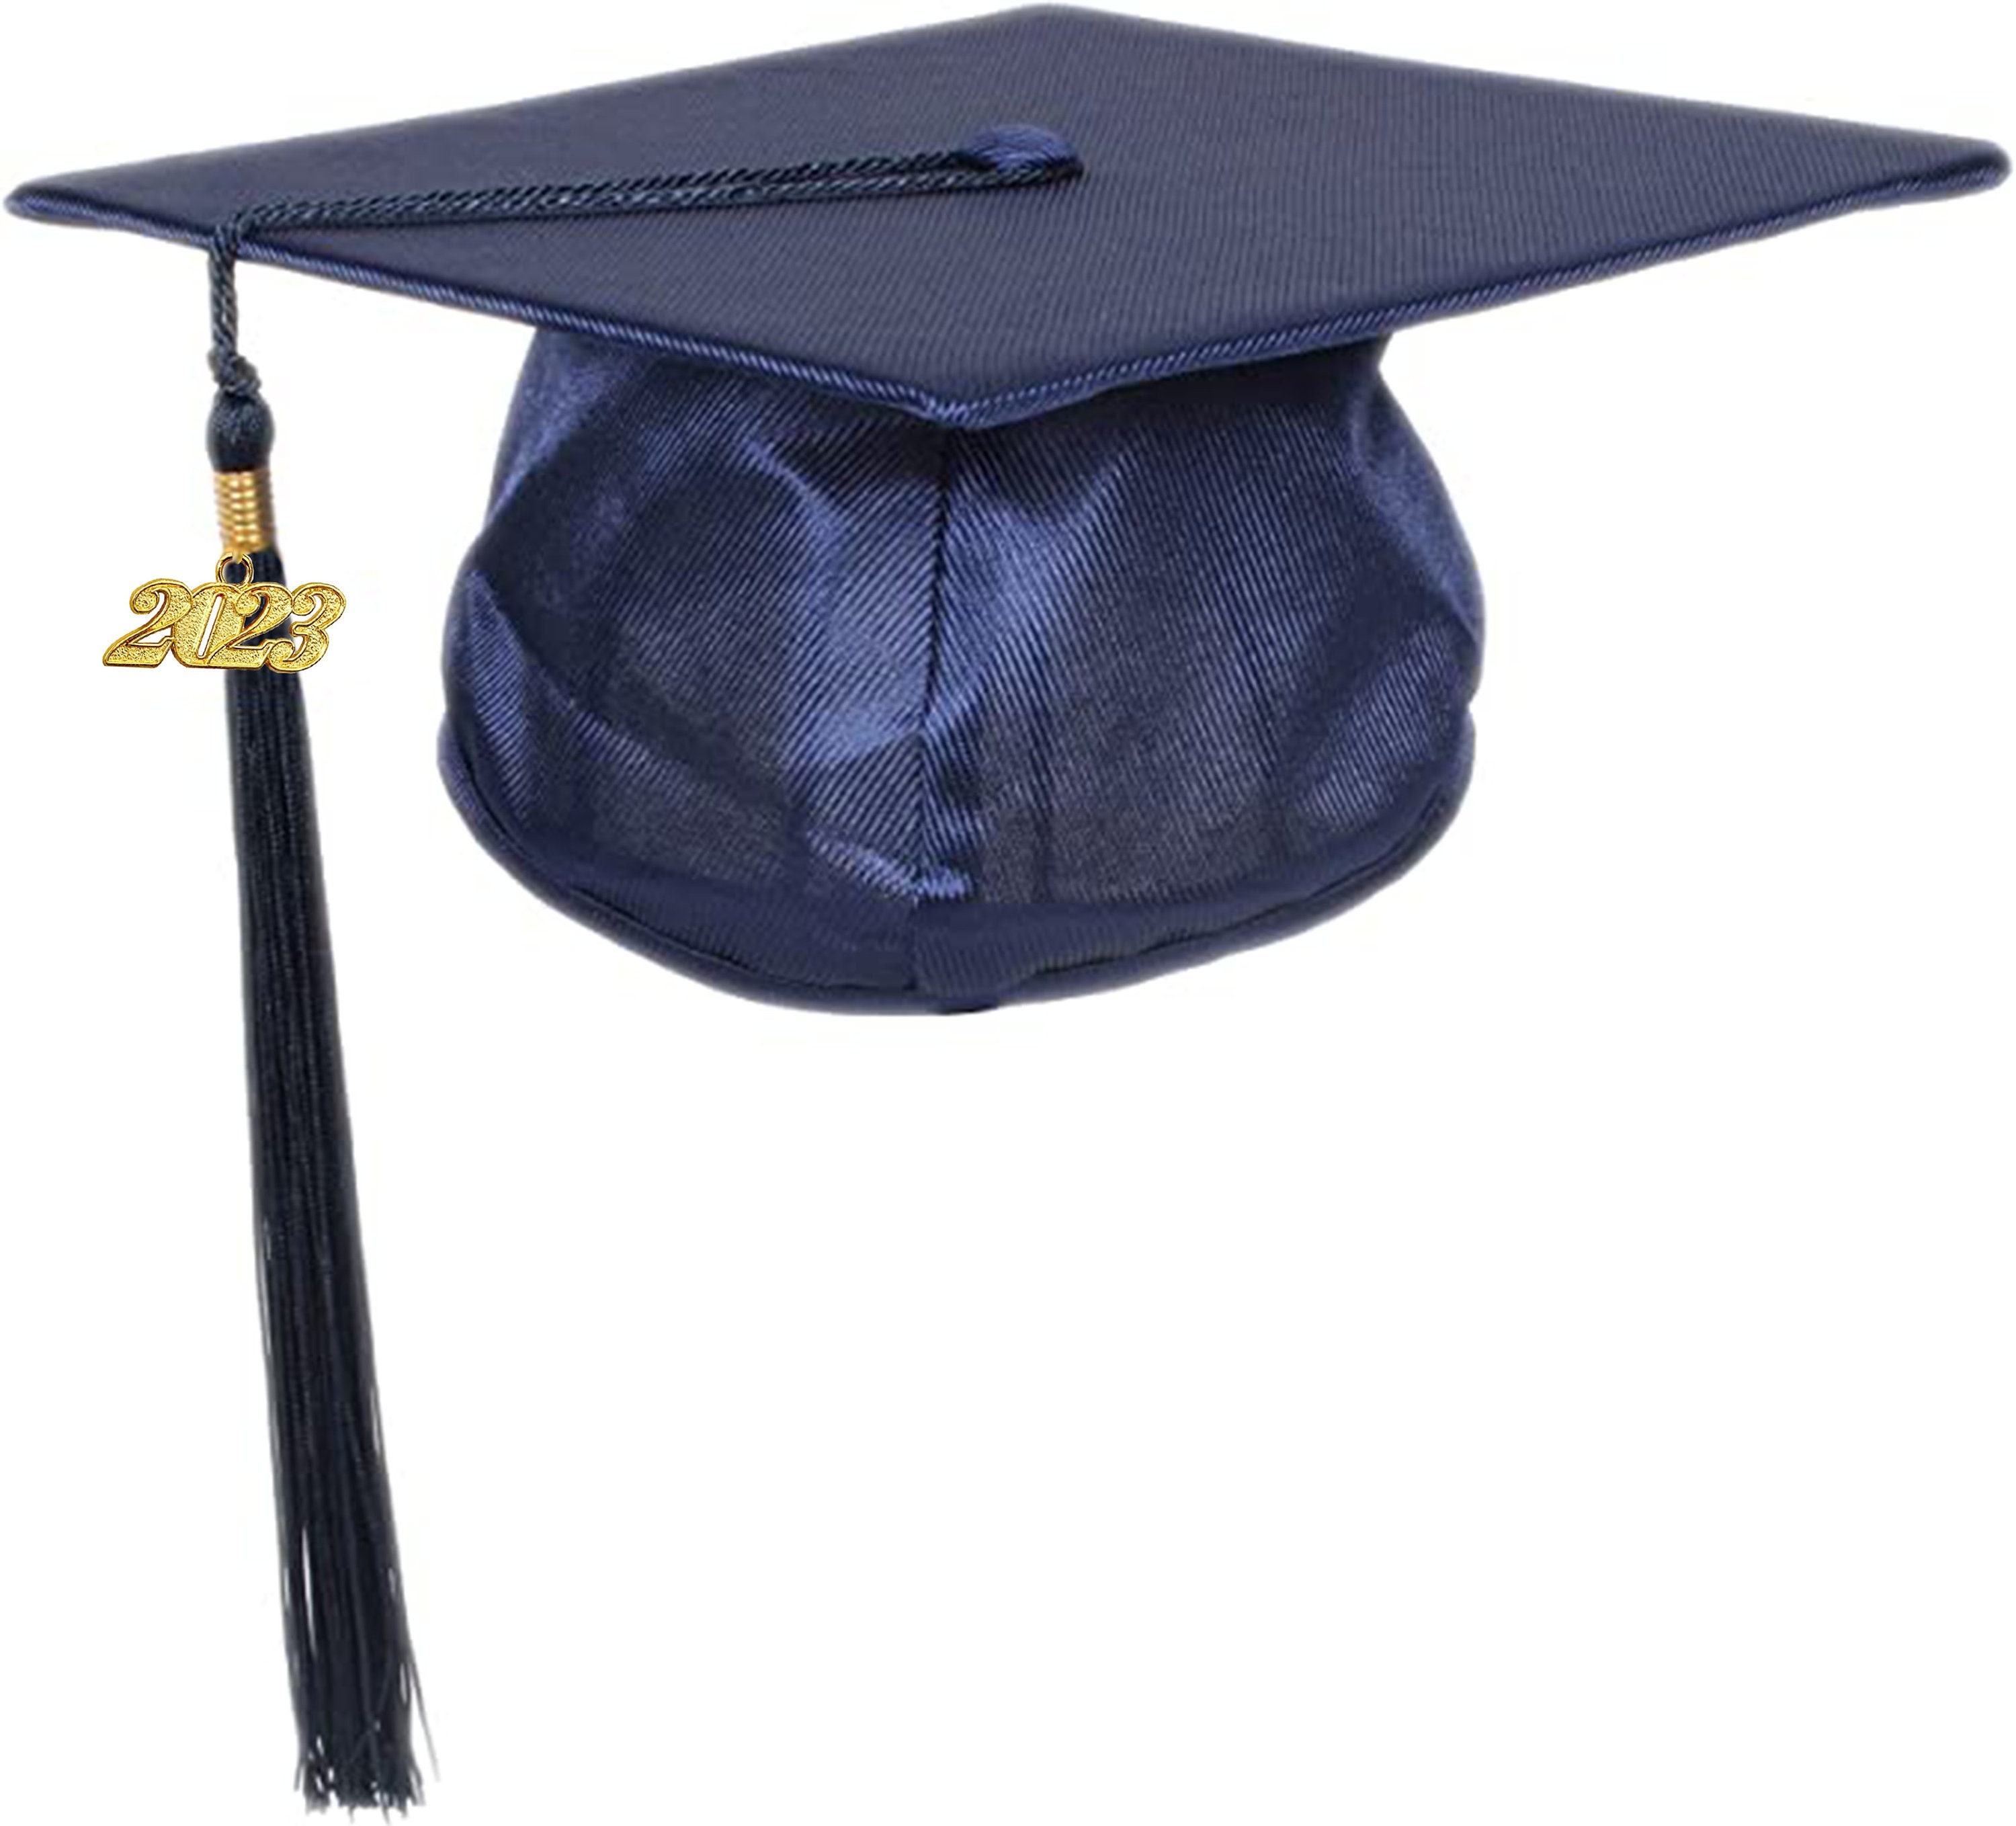  2024 Graduation Tassel, 2024 Graduation Cap Tassel, 2024 Tassel  Graduation, Graduation Tassel 2024 with 2024 Year Gold Charms for  Graduation Cap, Charm Ceremonies Accessories for Graduates, Blue Gold